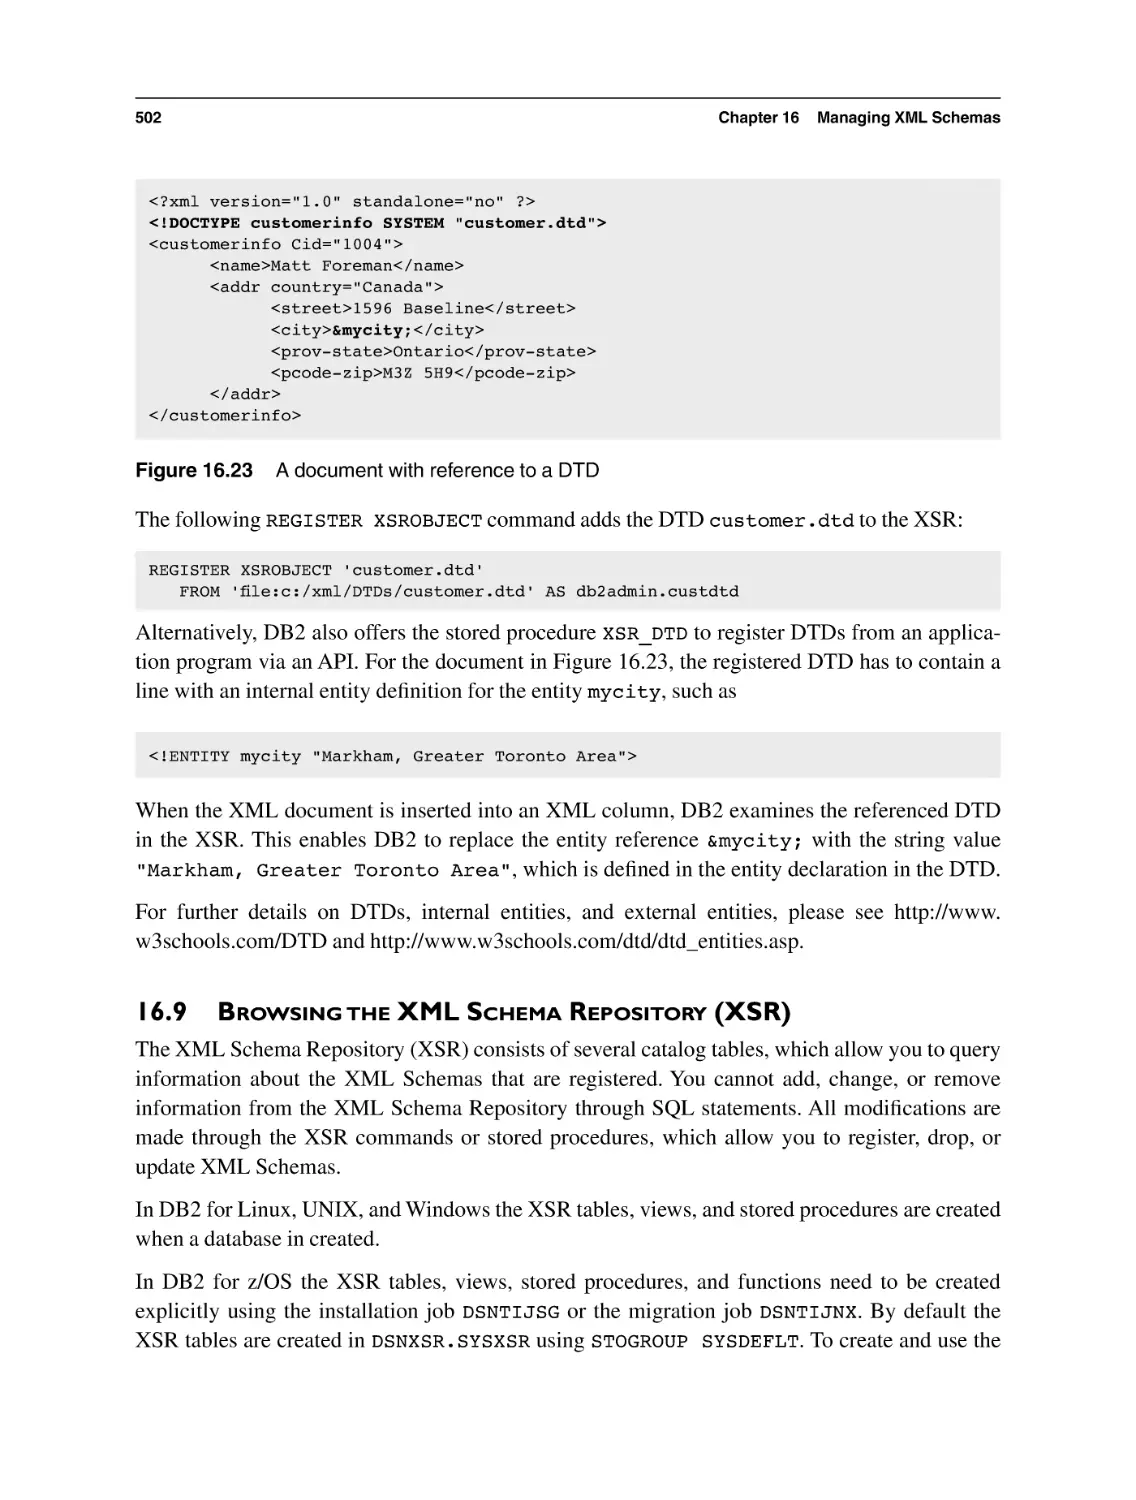 16.9 Browsing the XML Schema Repository (XSR)